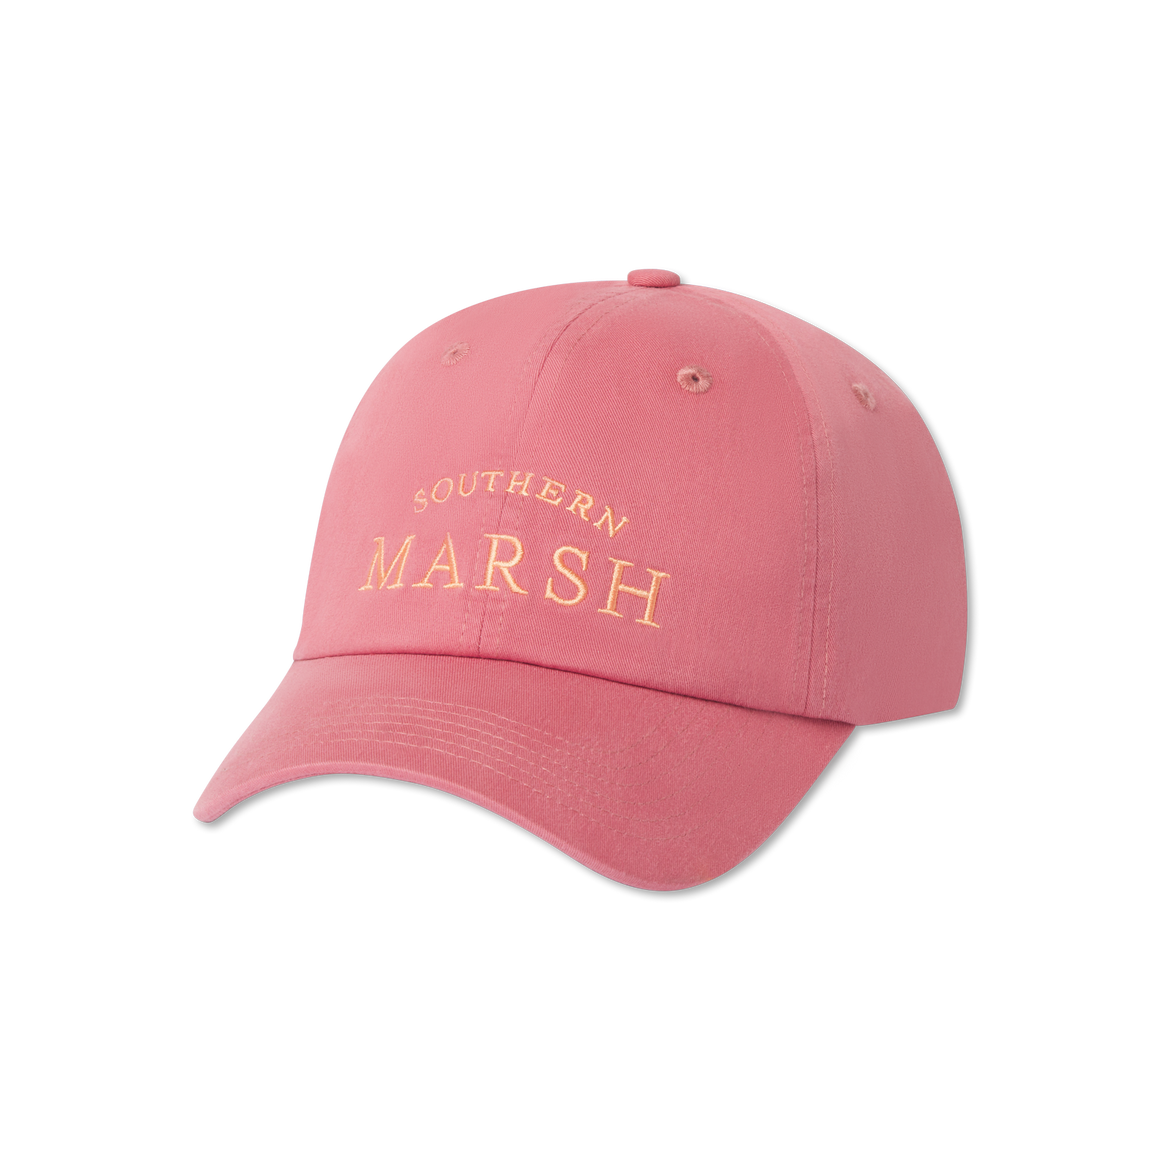 Southern Marsh Vintage Collegiate Hat - 2 Colors